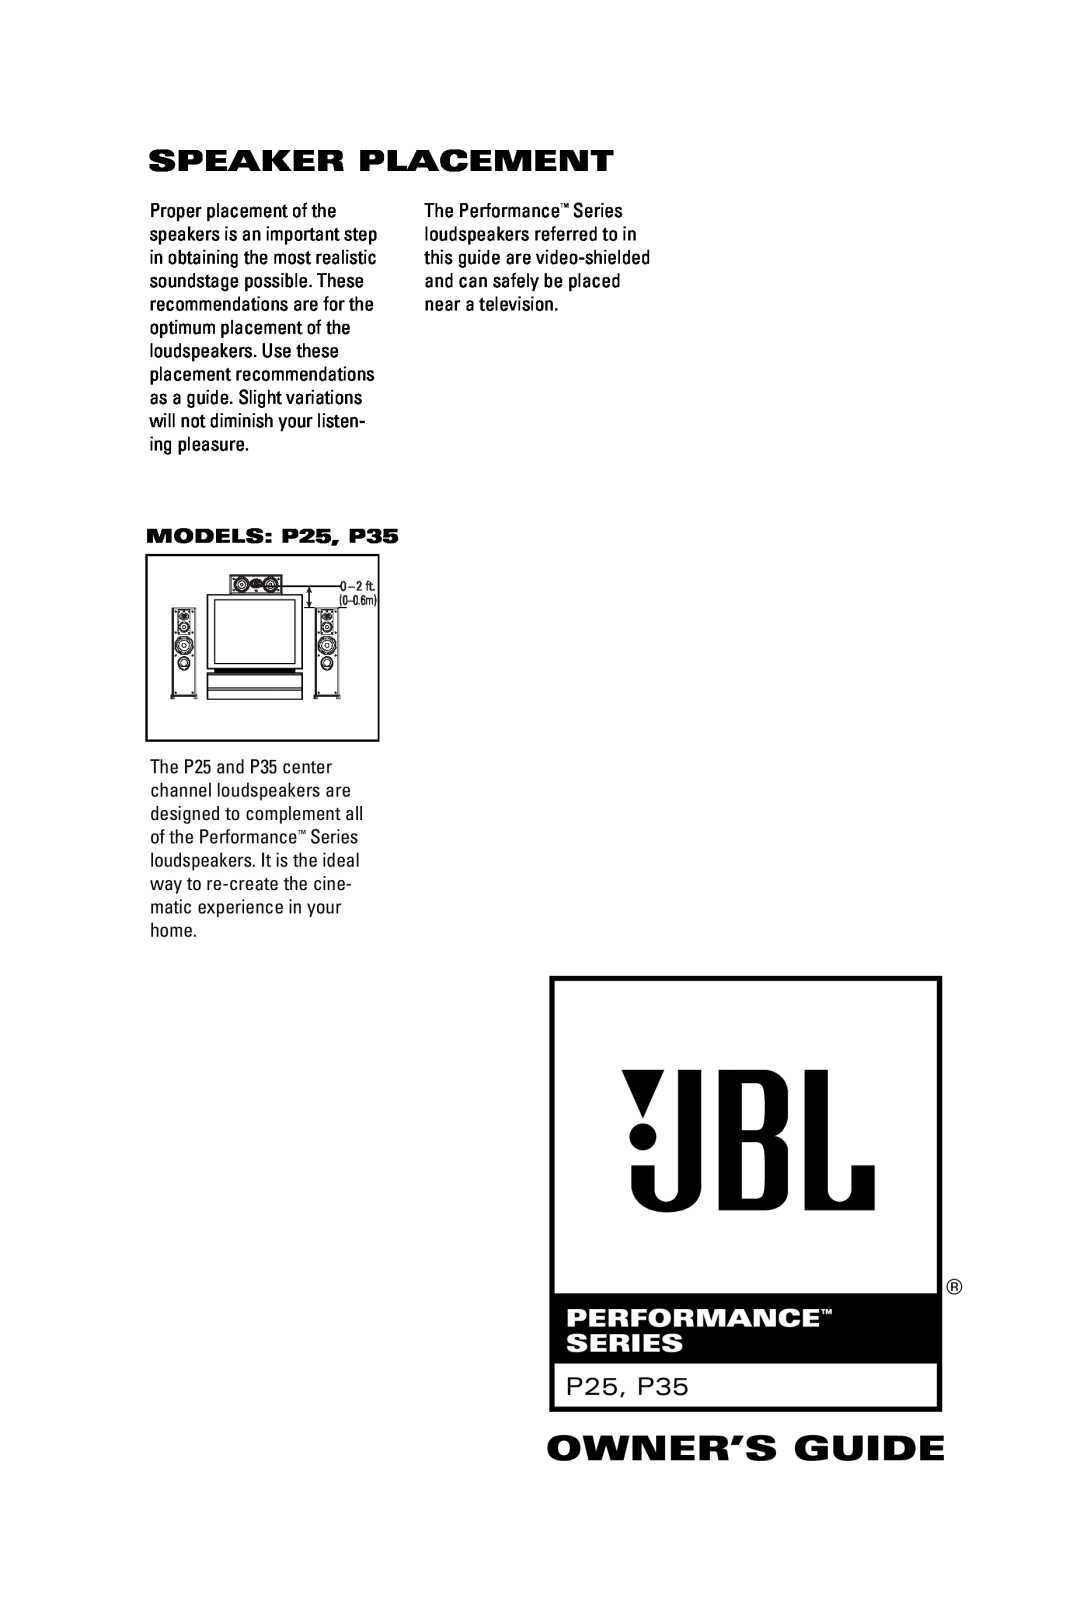 JBL manual Speaker Placement, MODELS P25, P35, Owner’S Guide, Performance Series 